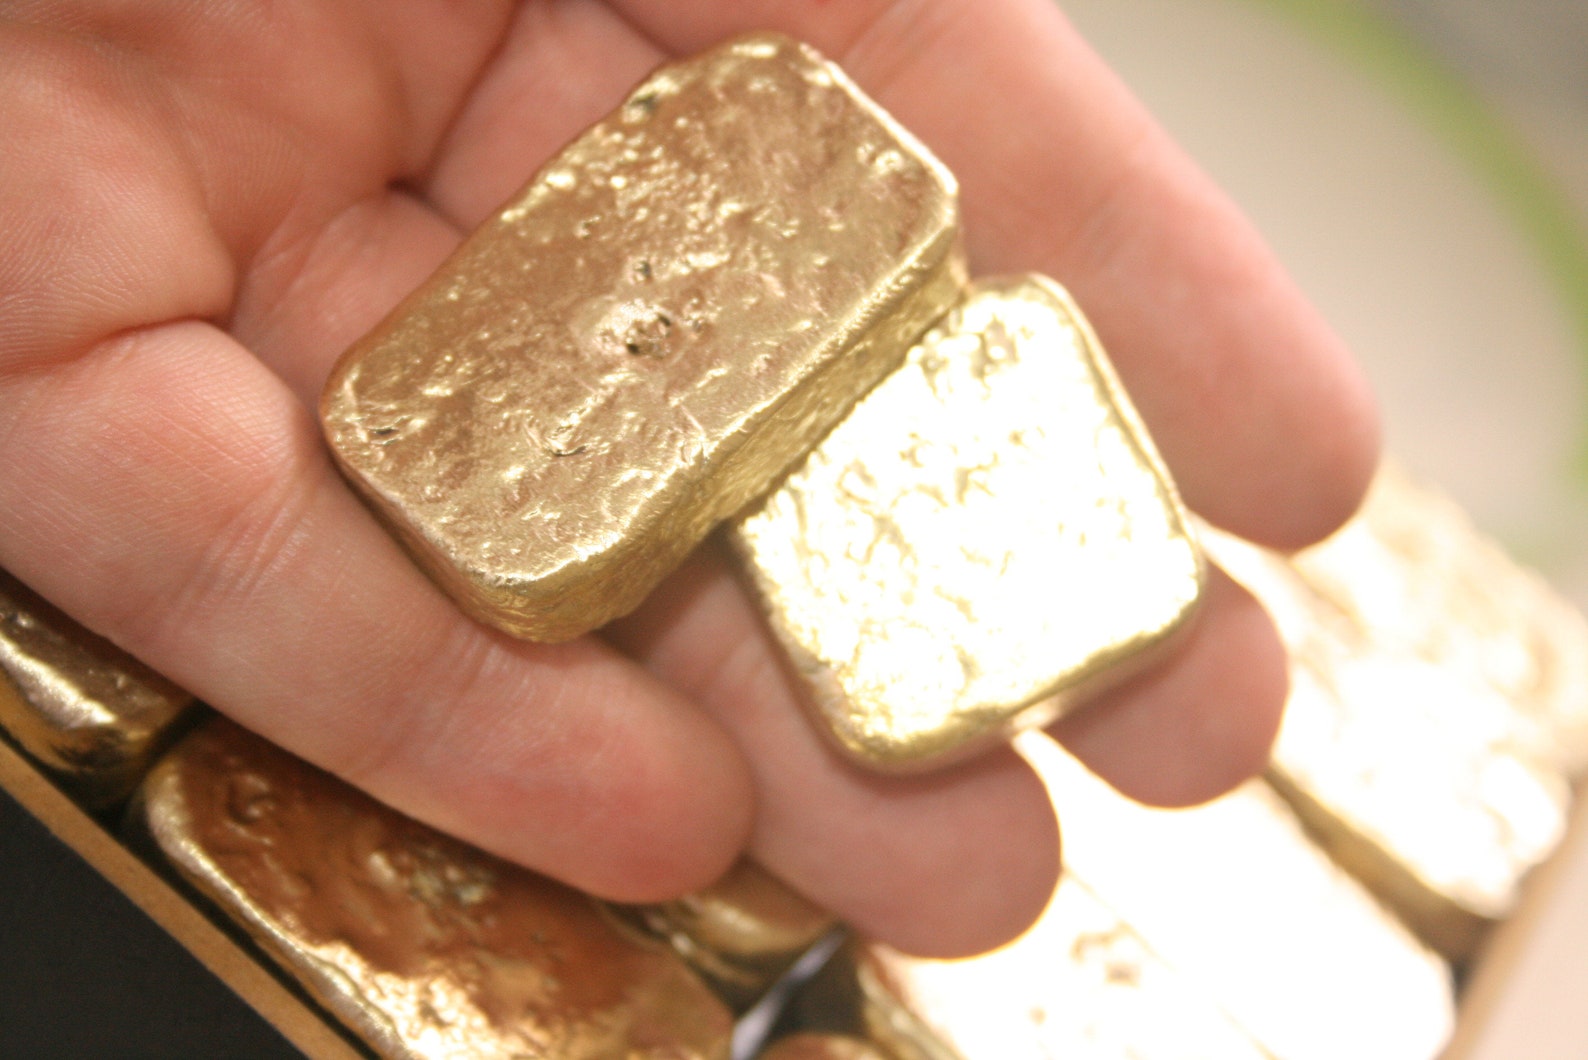 Цена грамма золота на сегодняшний день